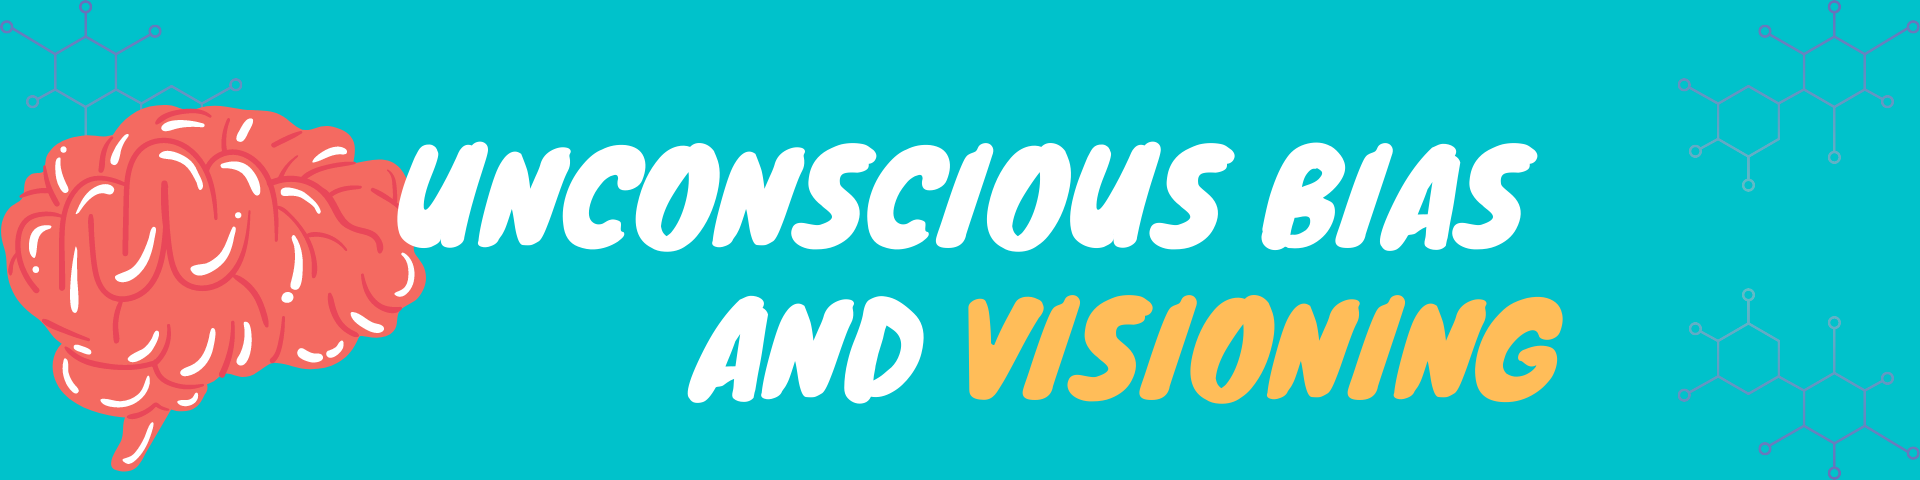 Unconscious bias and visioning